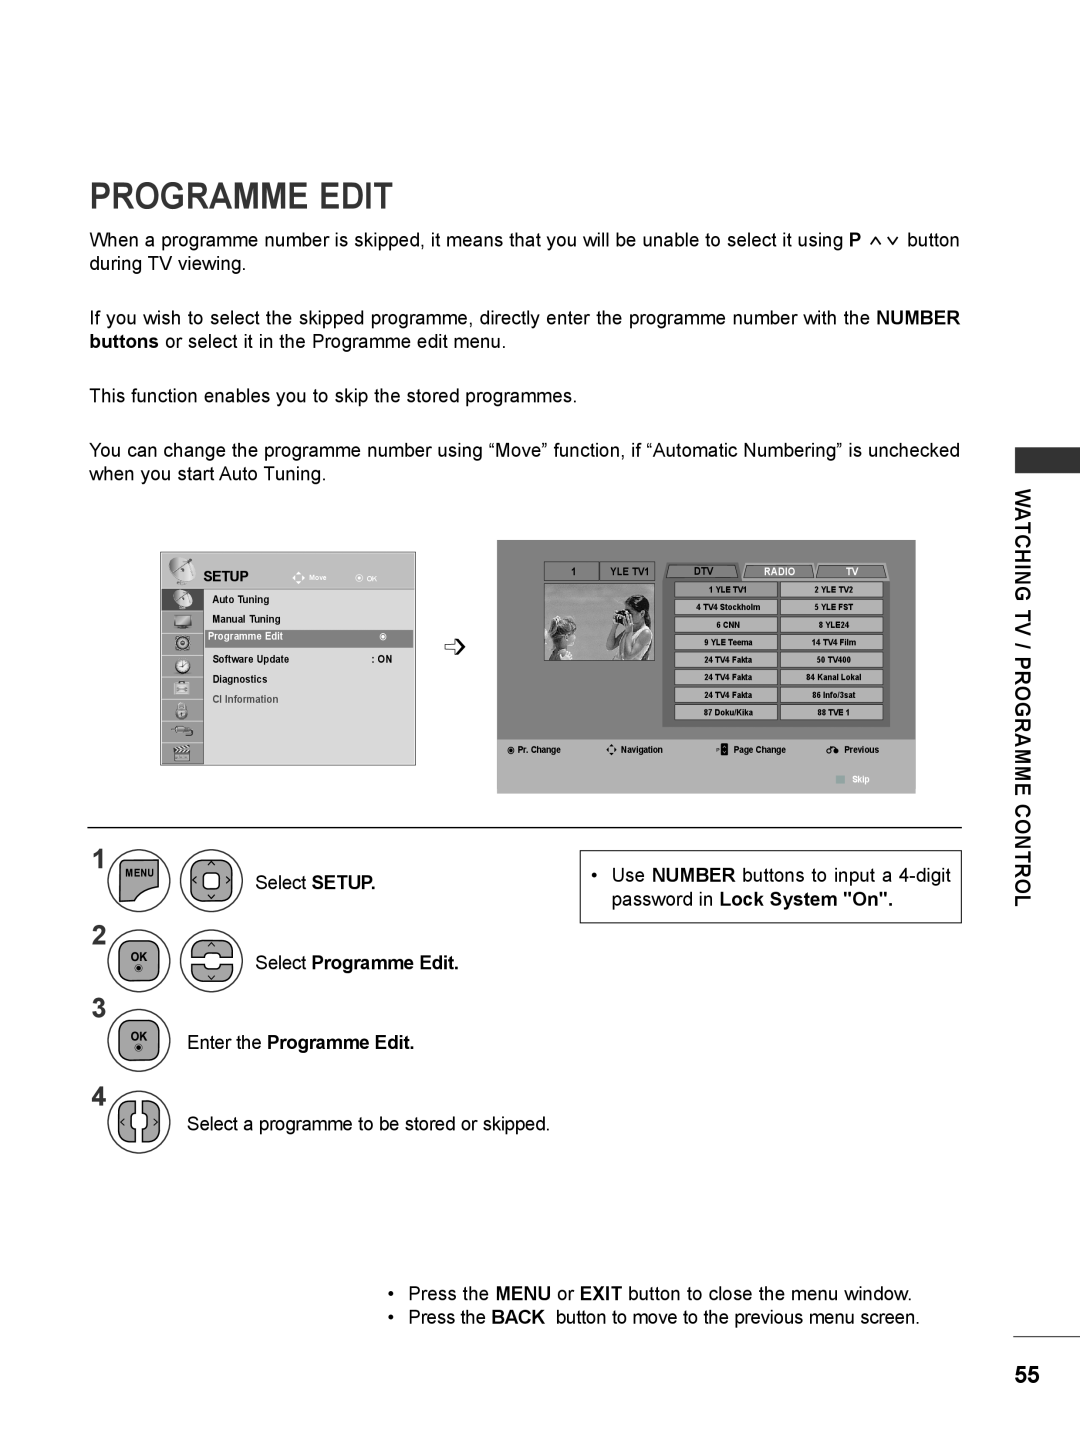 LG Electronics M2080DF, M2780DF, M2780DN, M2380DN, M2280D Select Programme Edit, Enter the Programme Edit, Control, Setup 